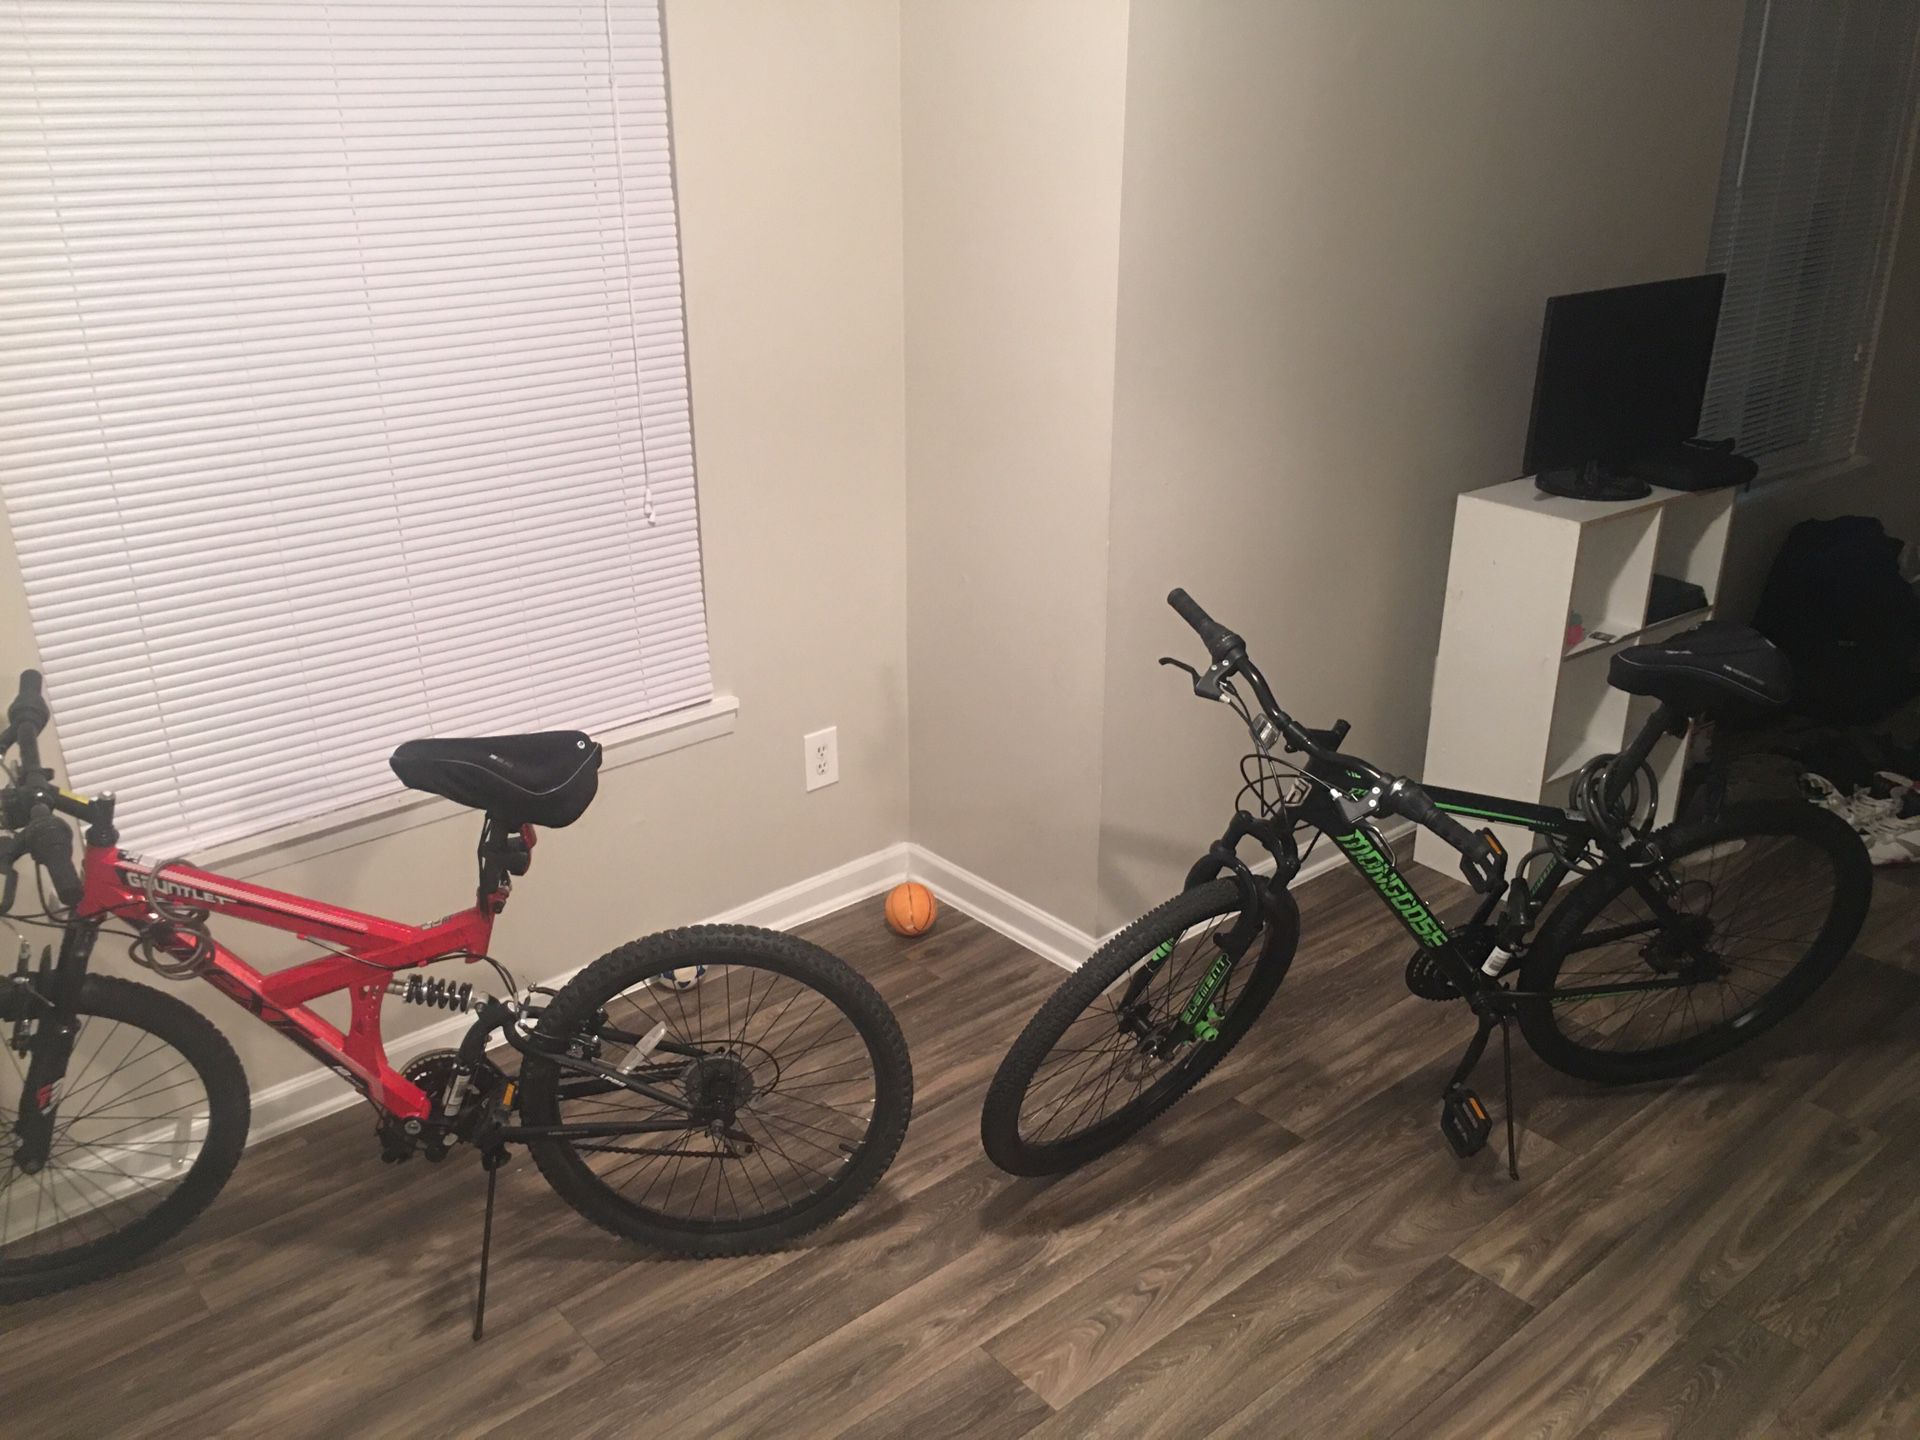 Mongoose bike and a next bike